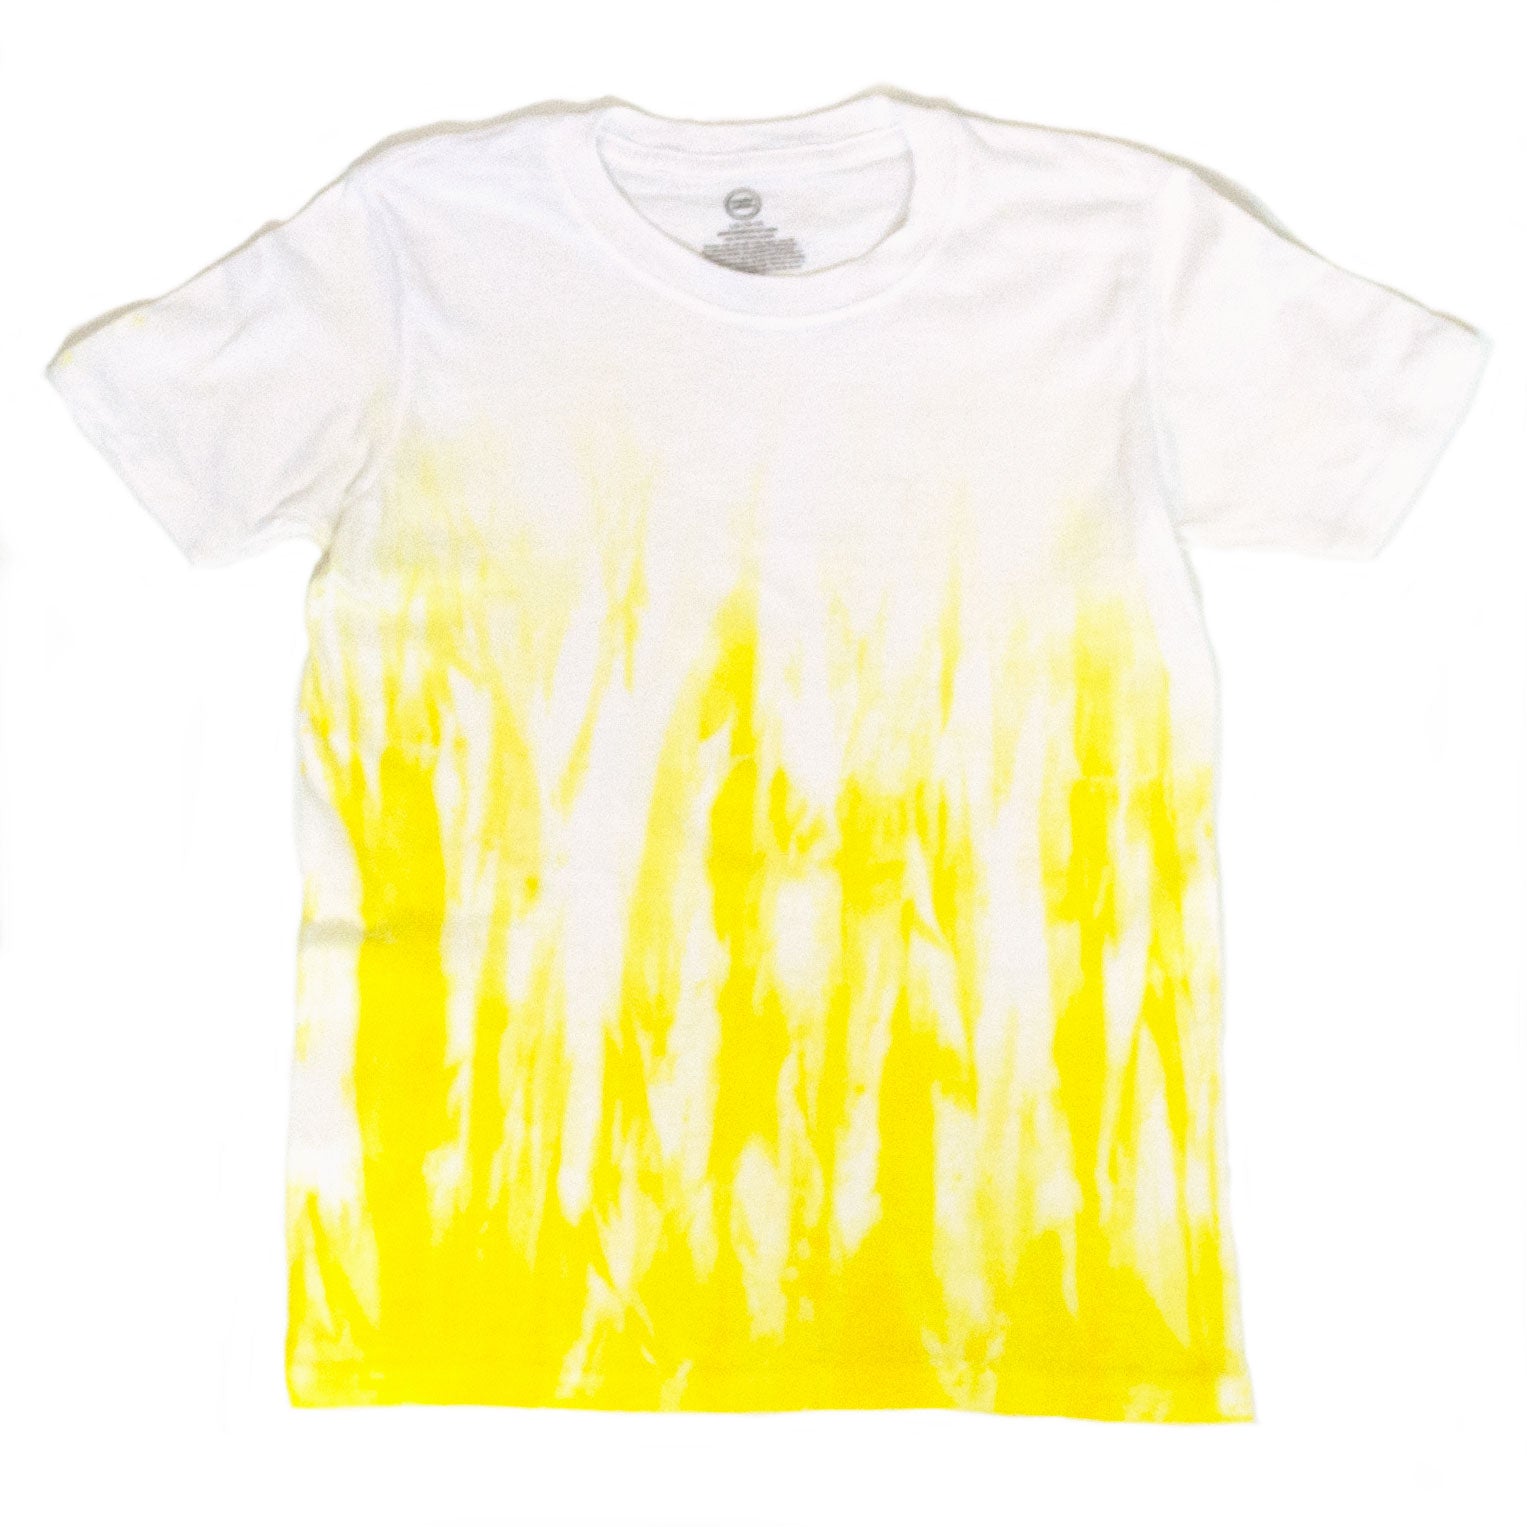 Tie Dye Charlotte Hornets T-Shirt [M] – Spicy Dye